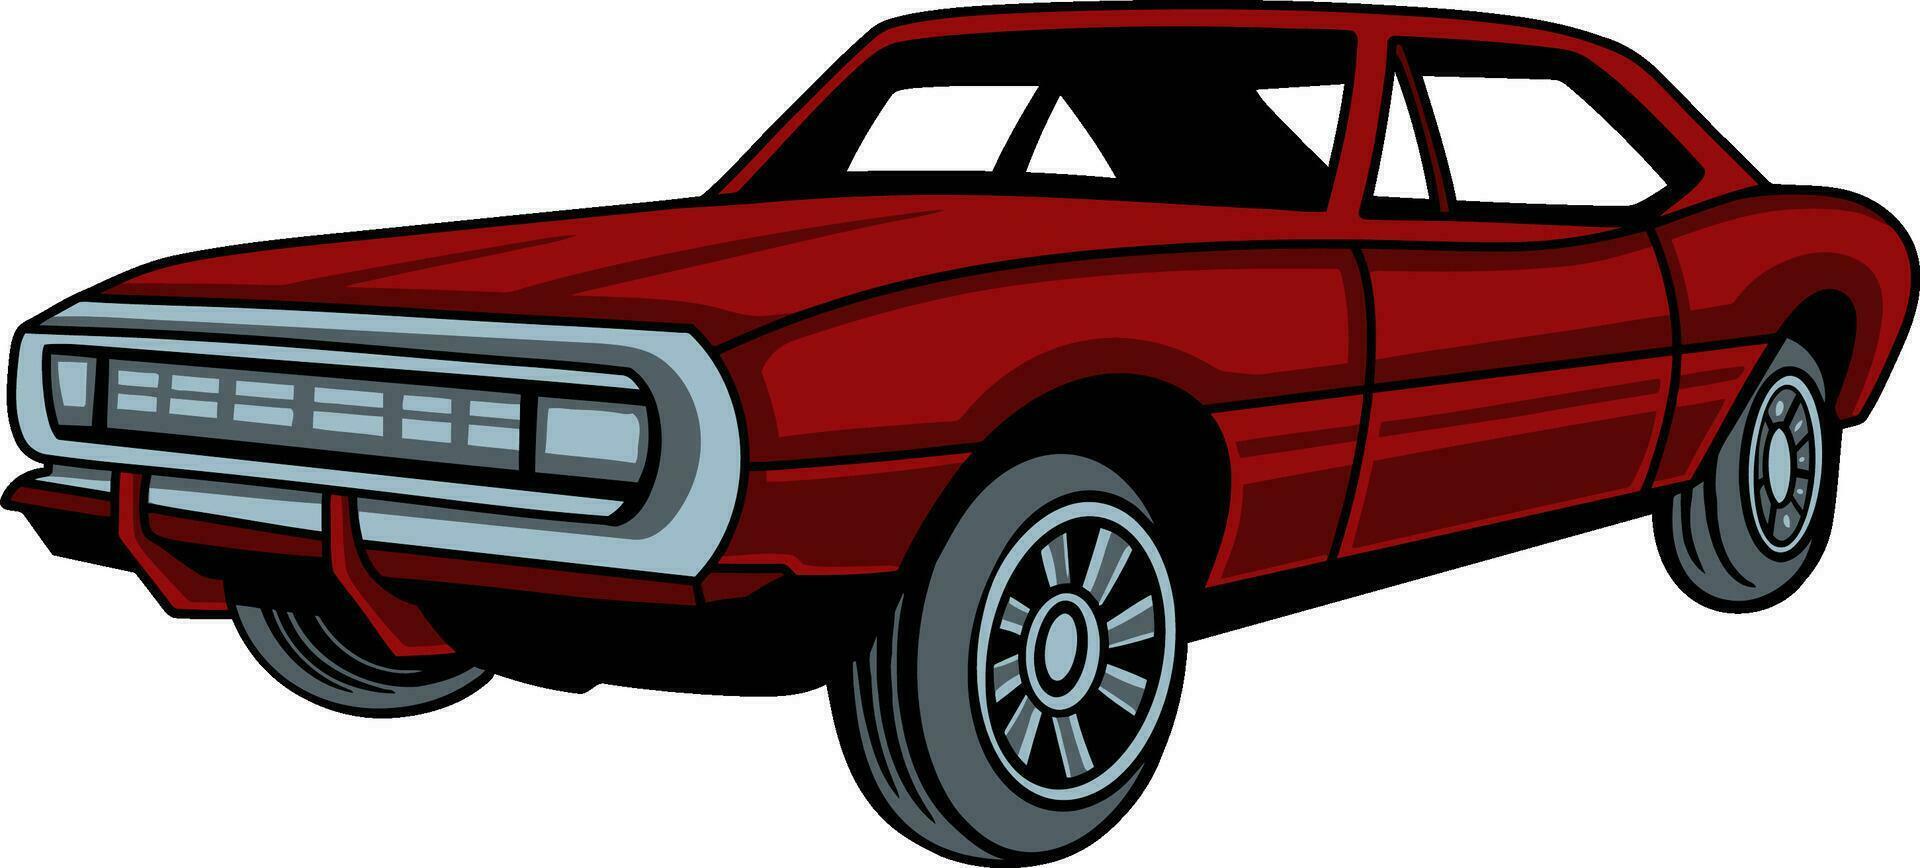 red retro car vector illustration